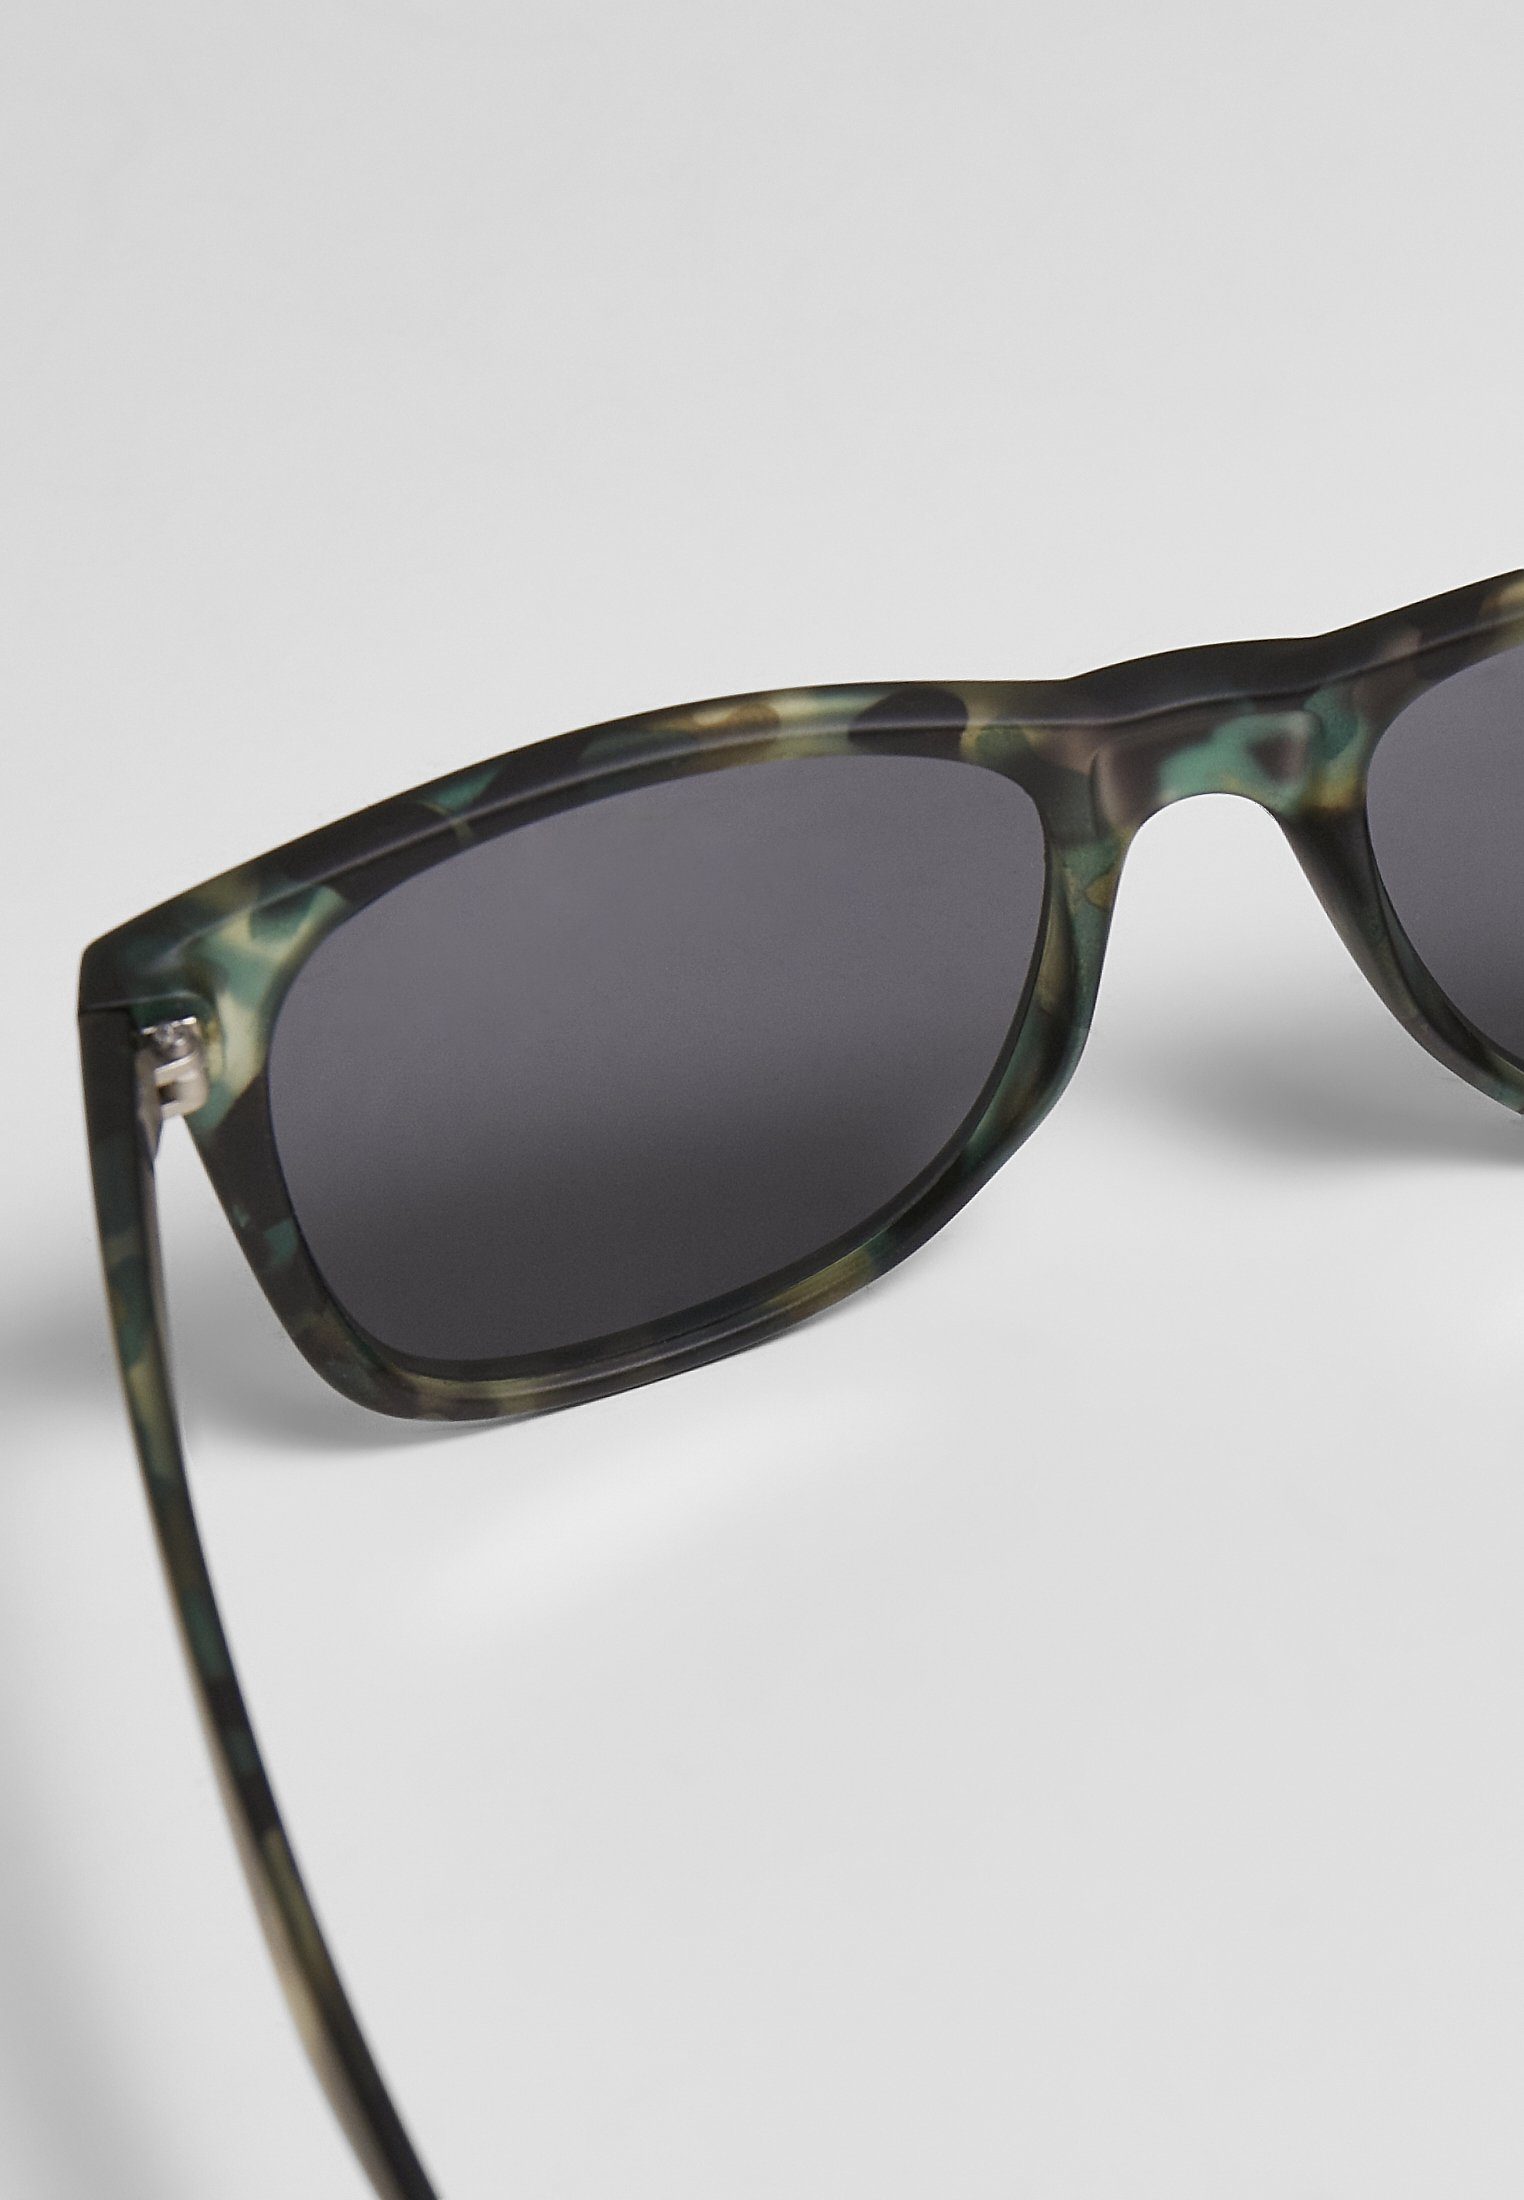 Sunglasses camouflage UC URBAN Sonnenbrille CLASSICS Likoma Accessoires